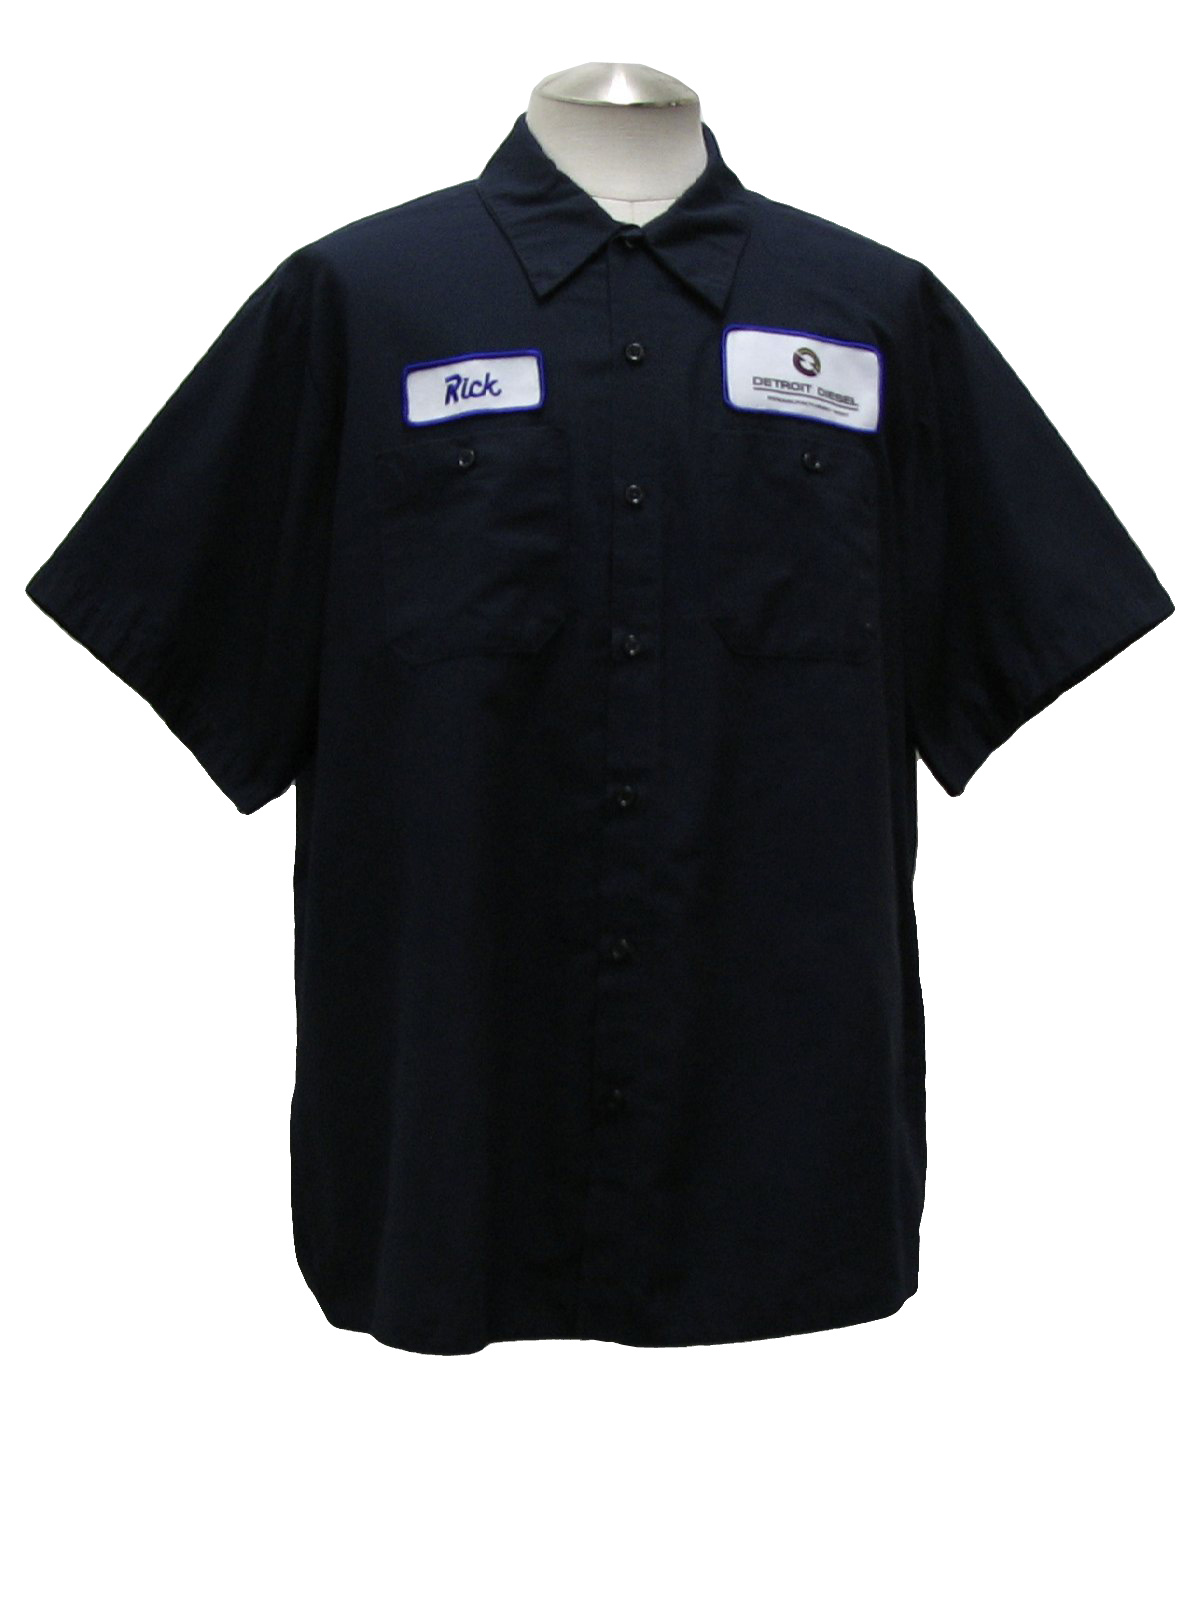 Vintage Team Wear 1990s Shirt: 90s -Team Wear- Mens navy blue short ...